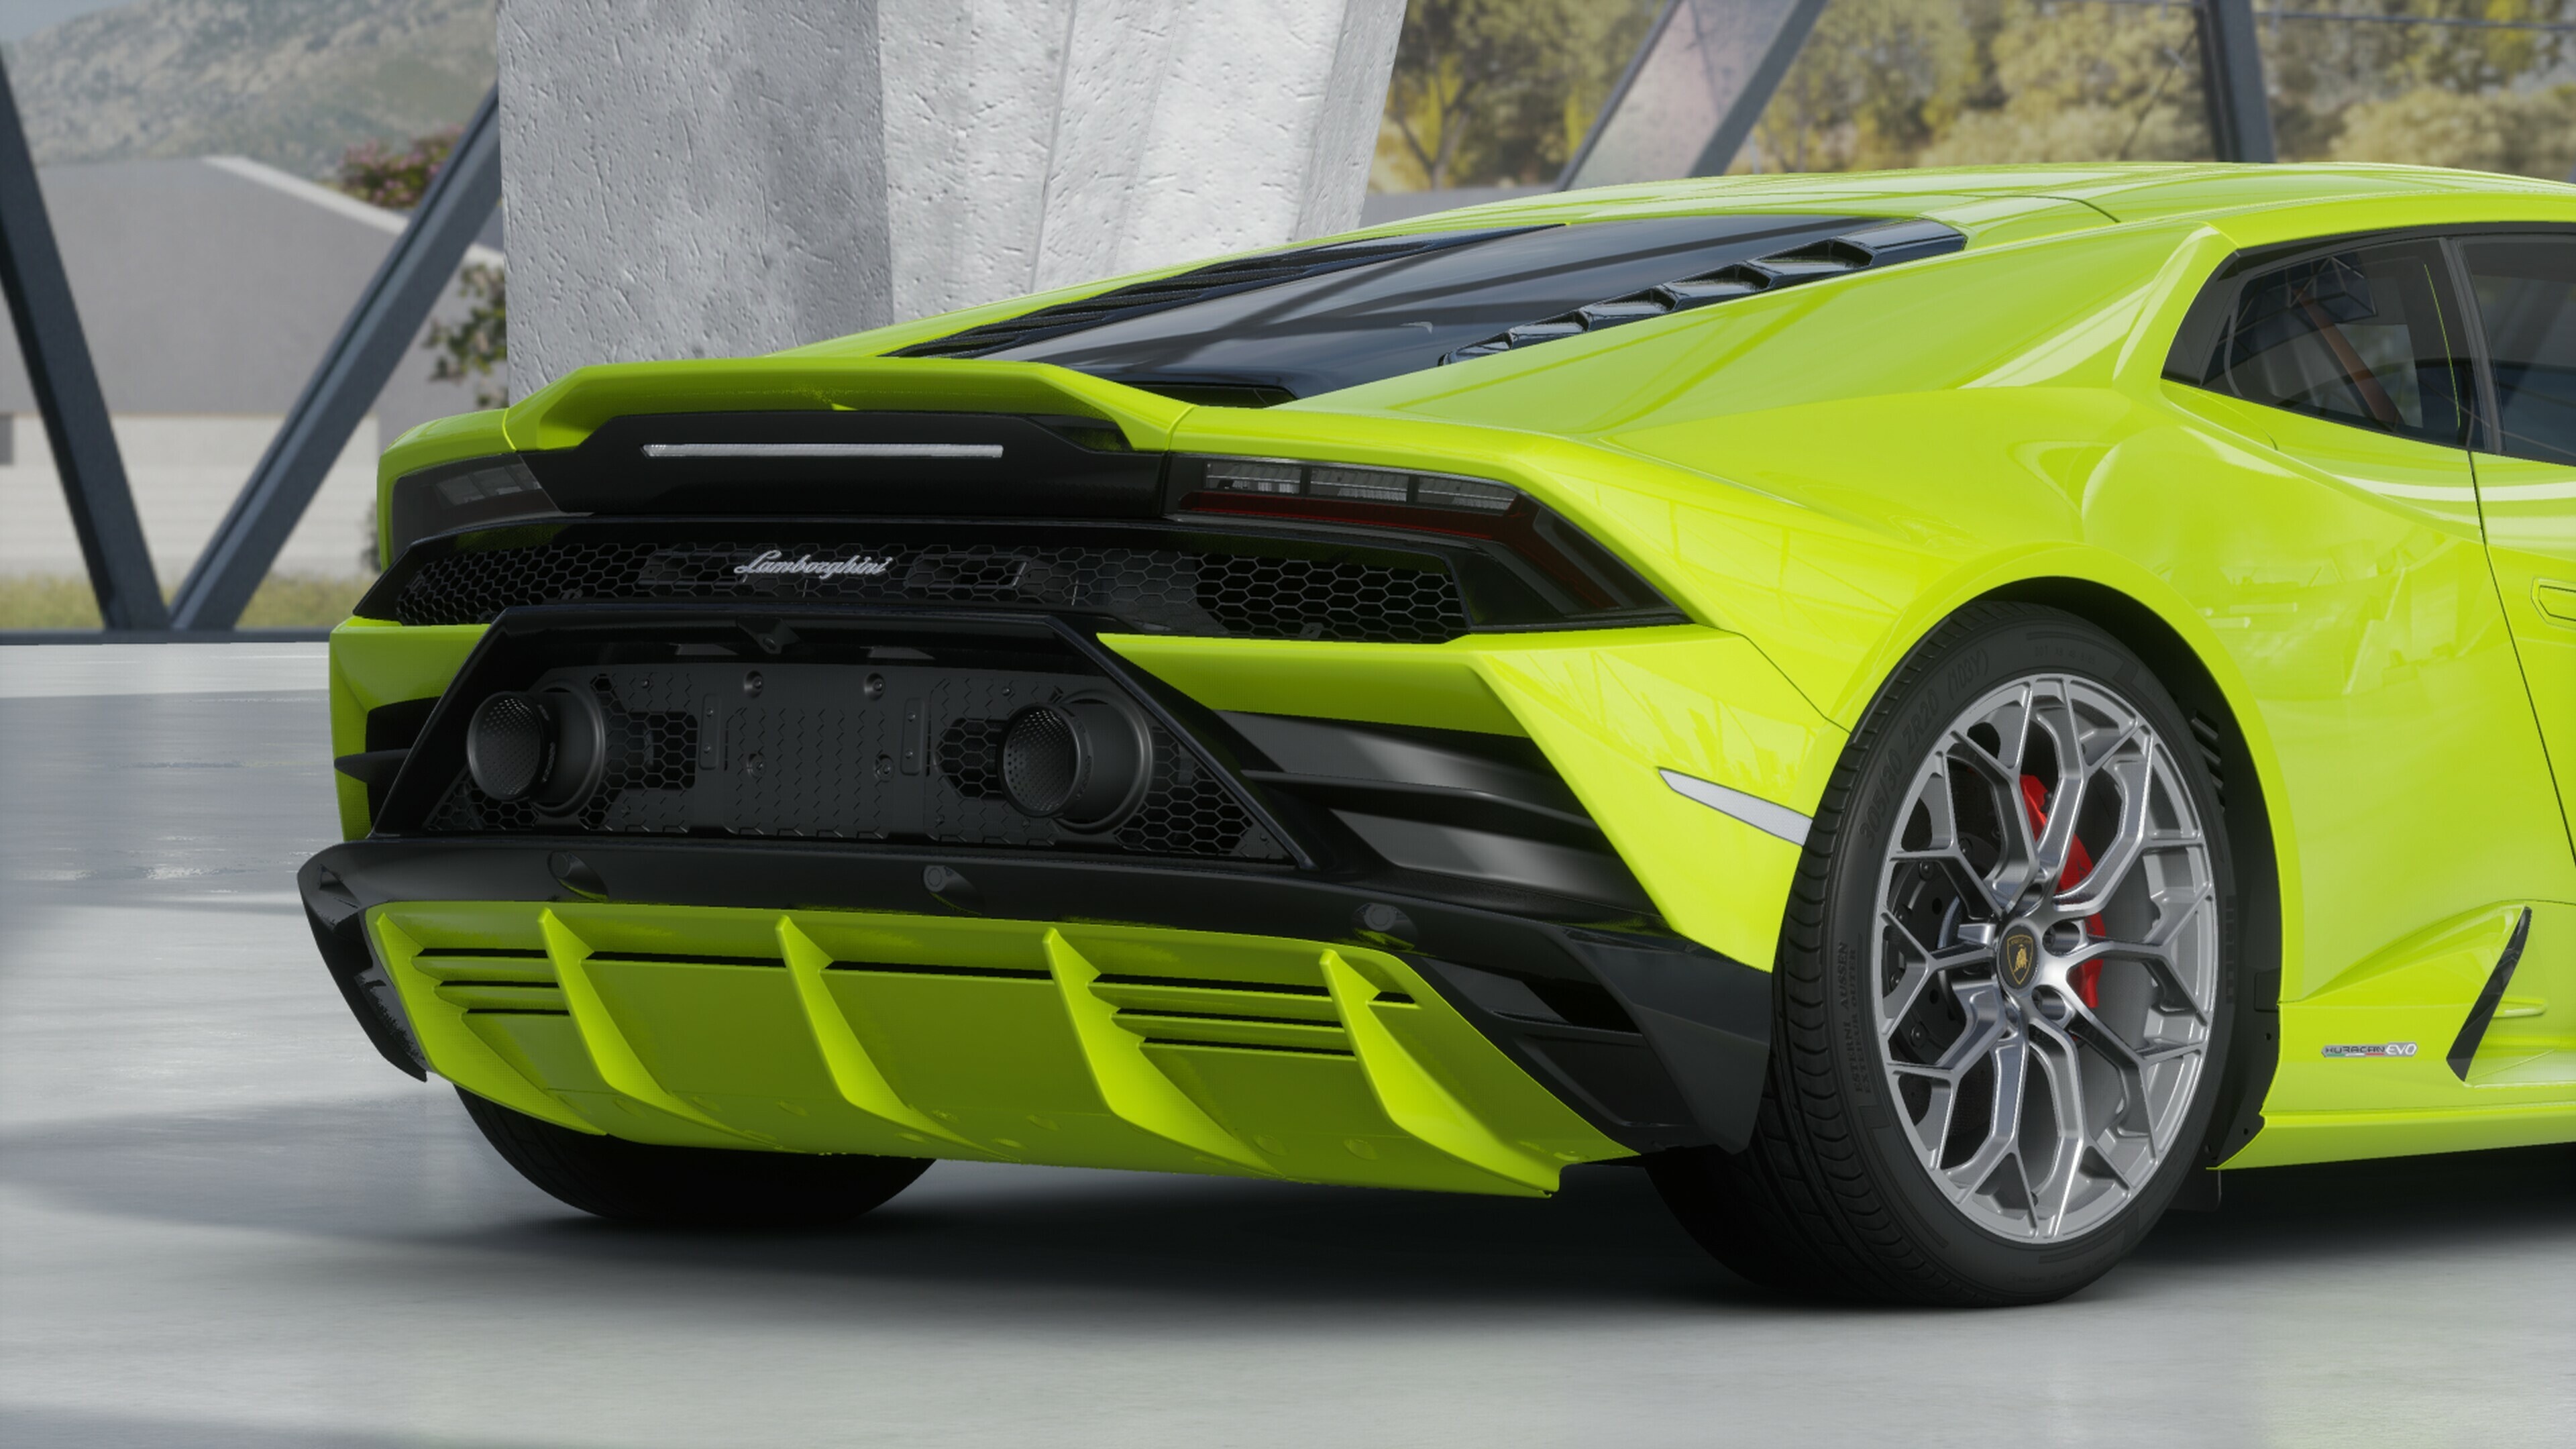 Lamborghini Huracan, Leasing opportunities, Fleet agency, Business solution, 3840x2160 4K Desktop